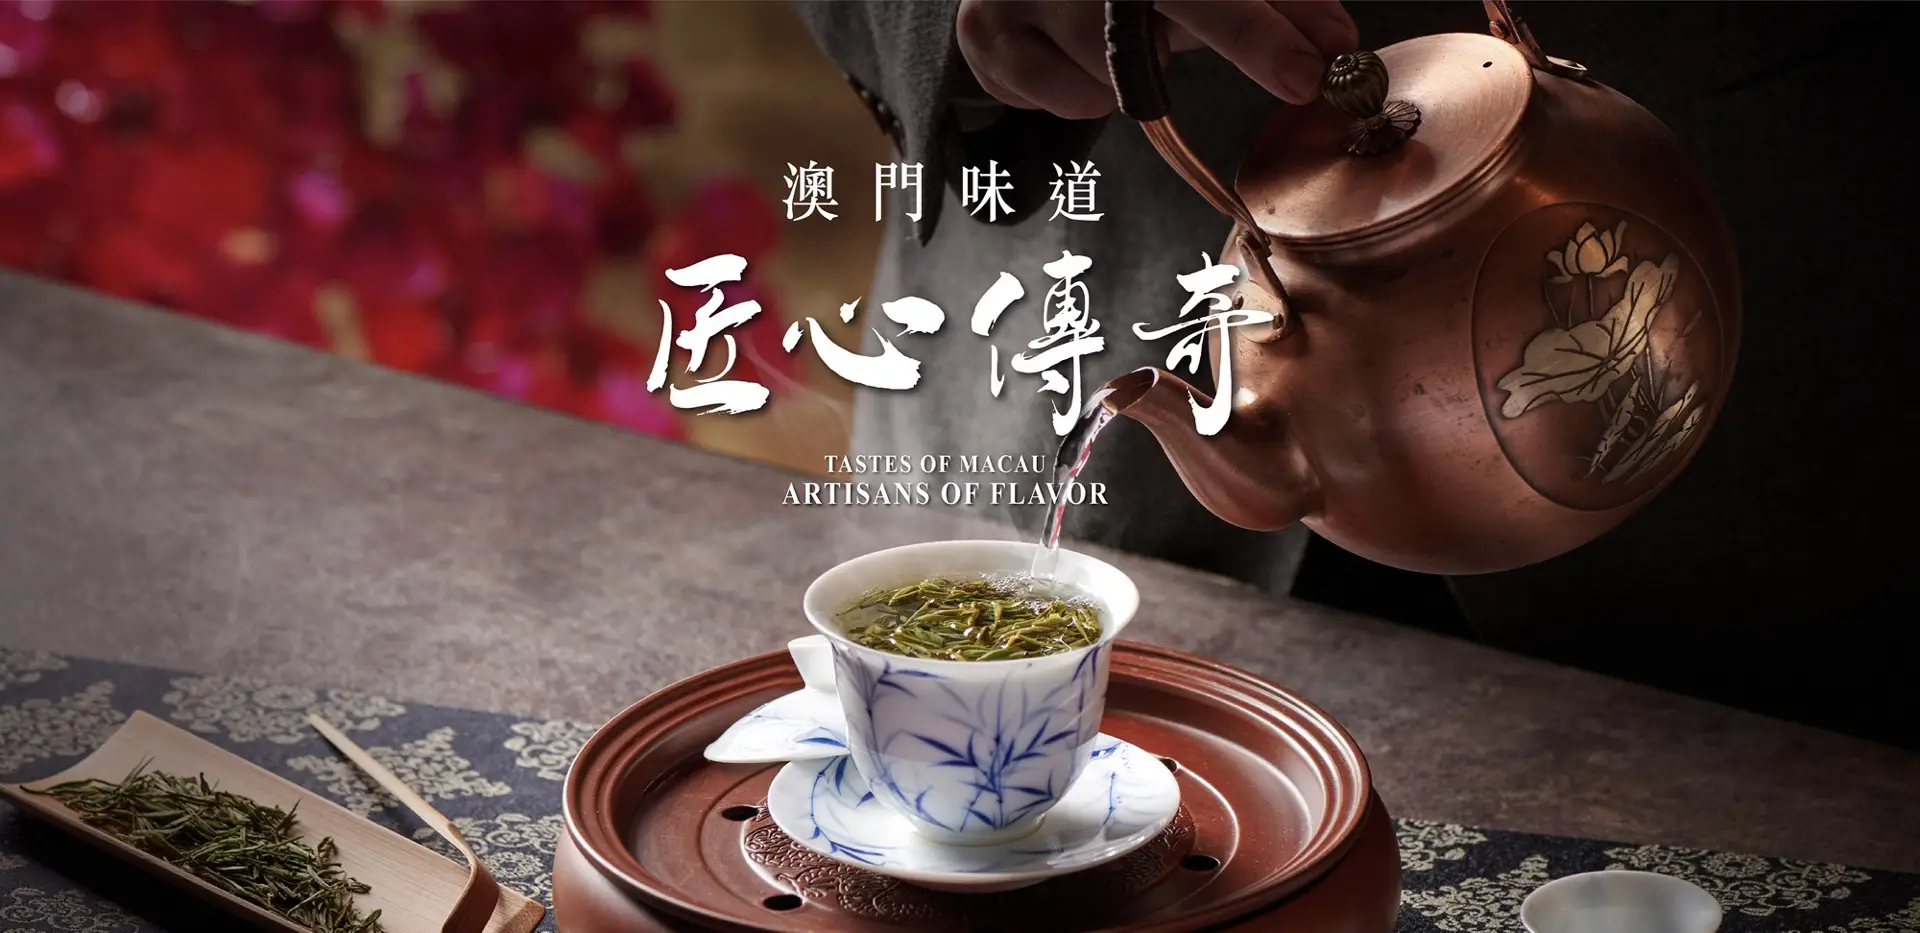 Tastes of Macau Artisans of Flavor